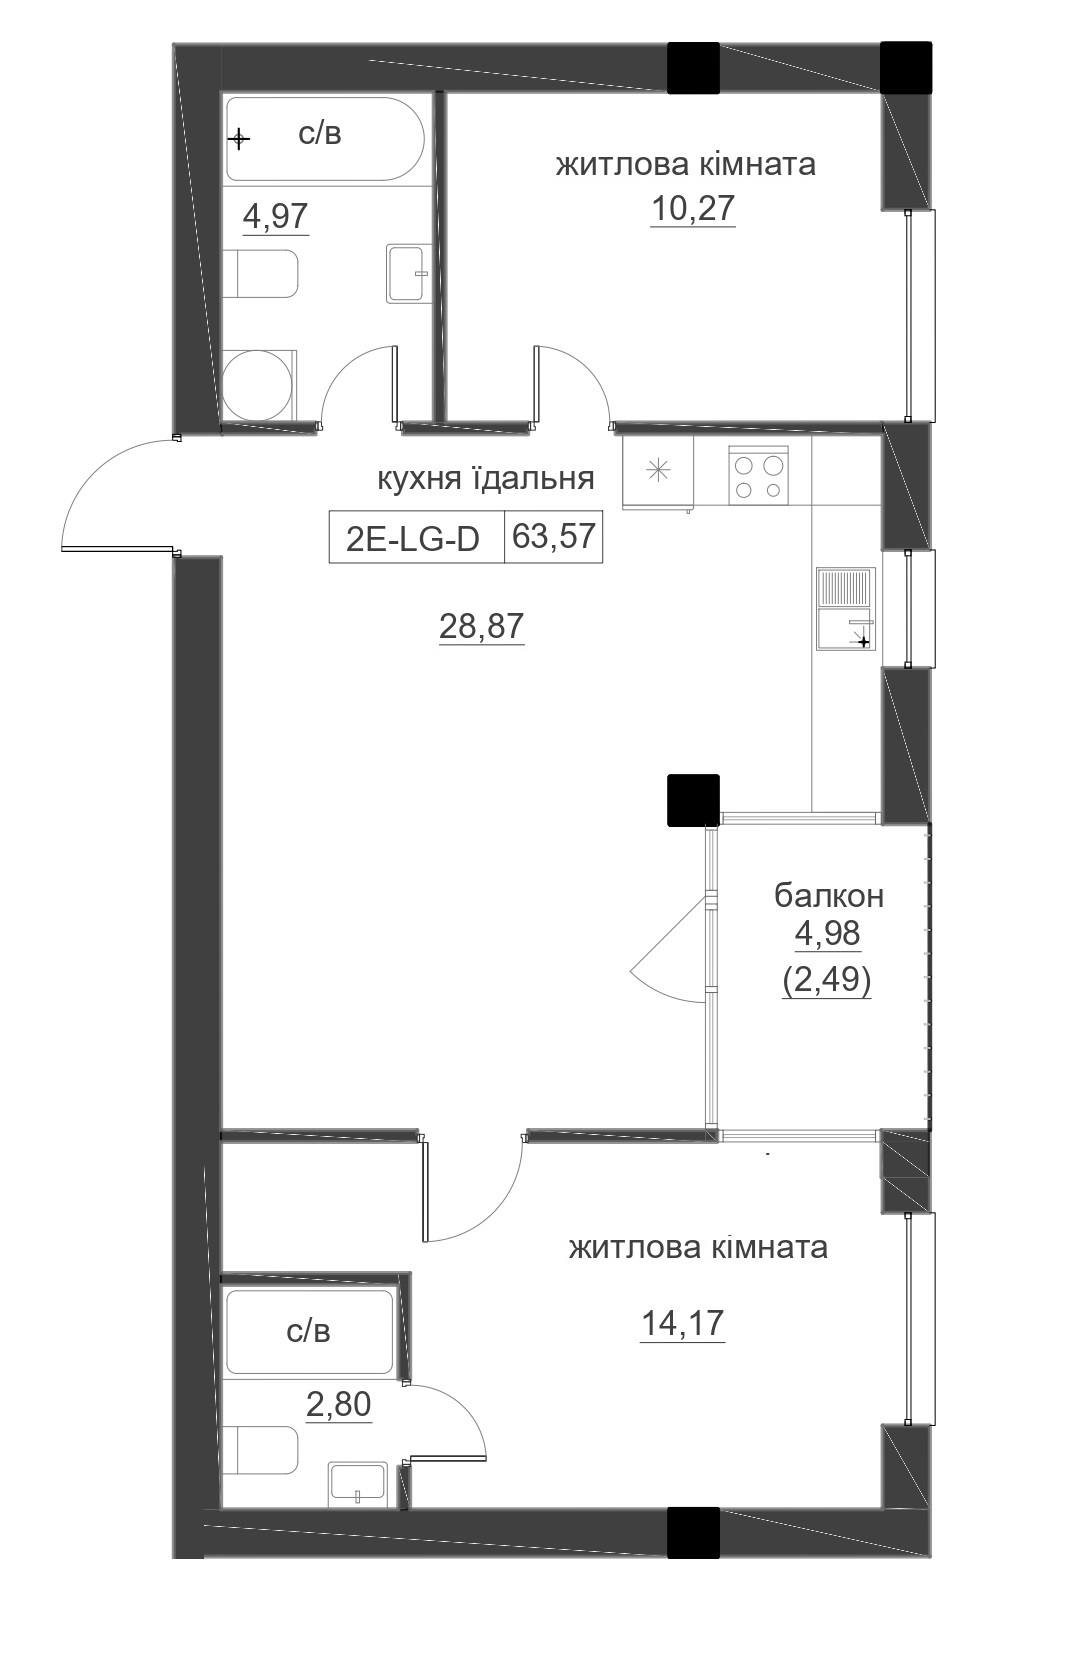 Planning 2-rm flats area 63.57m2, LR-005-05/0006.